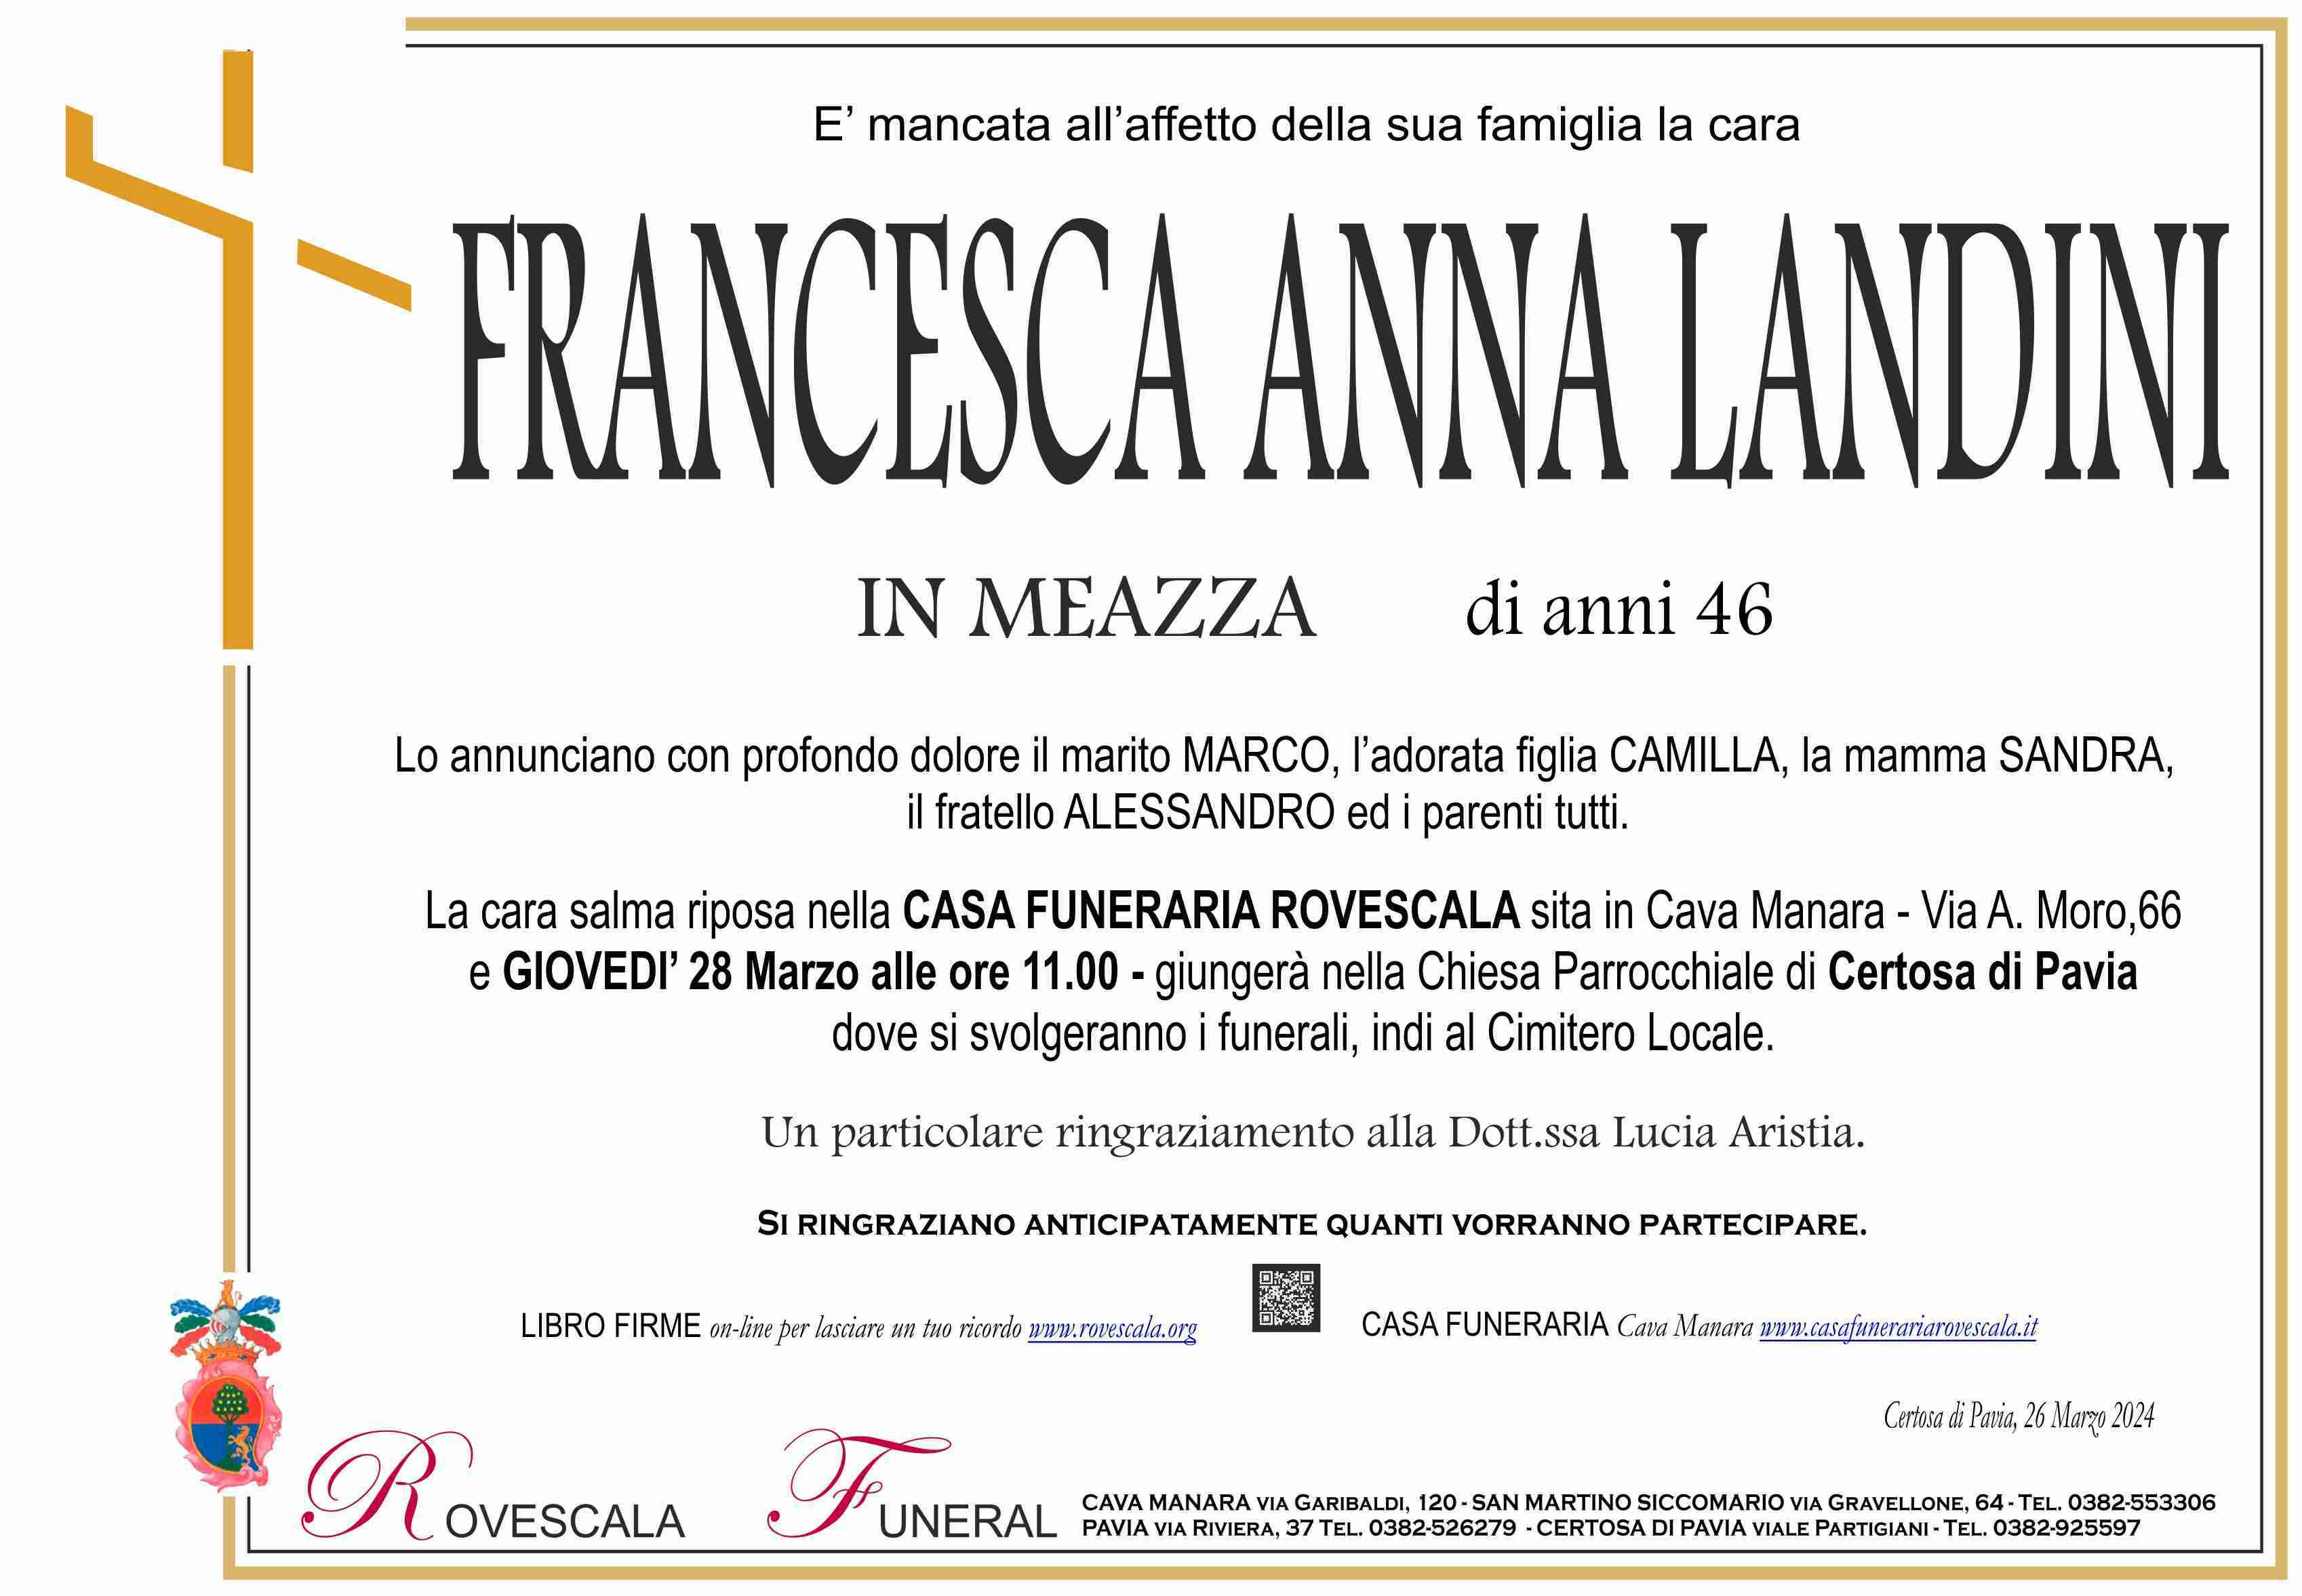 Francesca Anna Landini